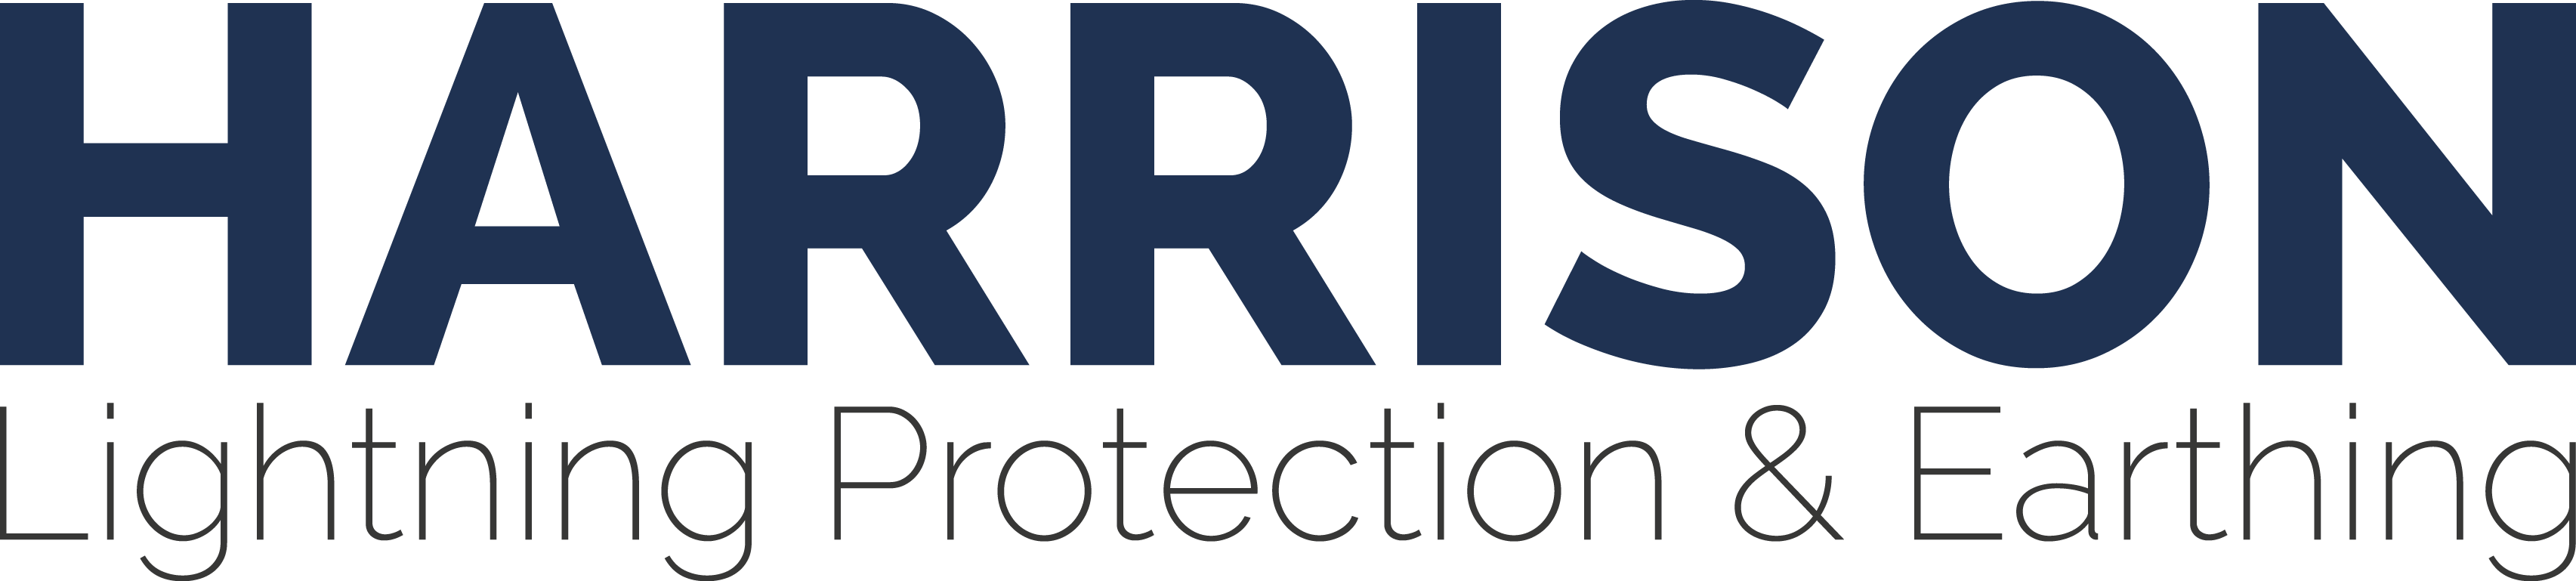 Harrison Logo - Harrison Lightning Protection & Earthing | Lightning Protection ...